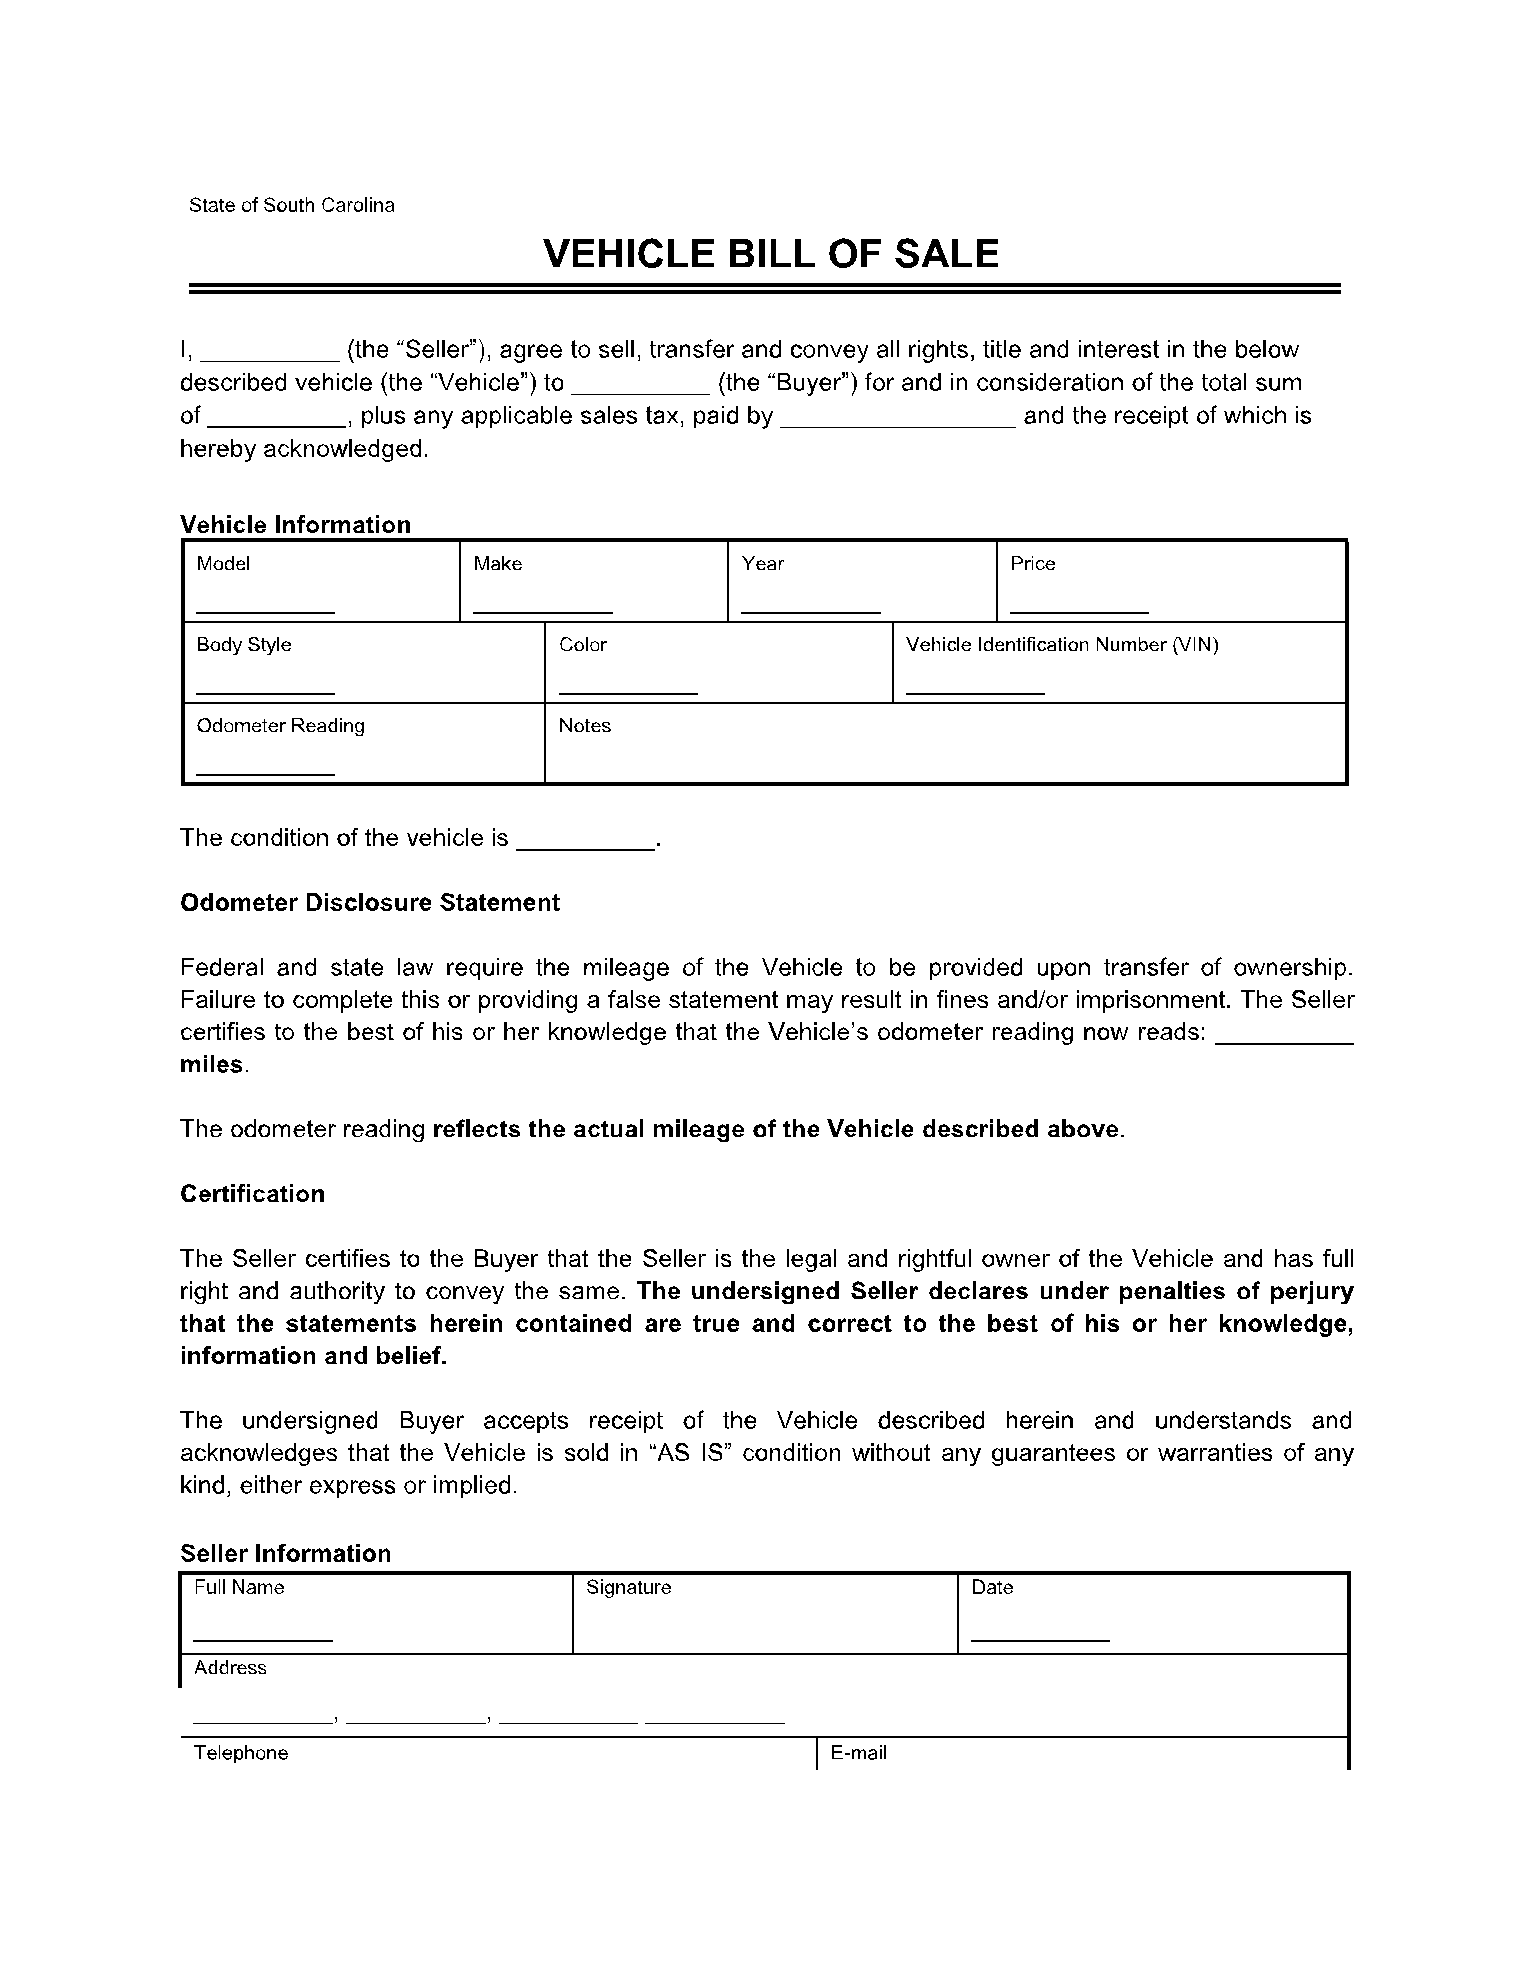 Vehicle Bill of Sale in South Carolina